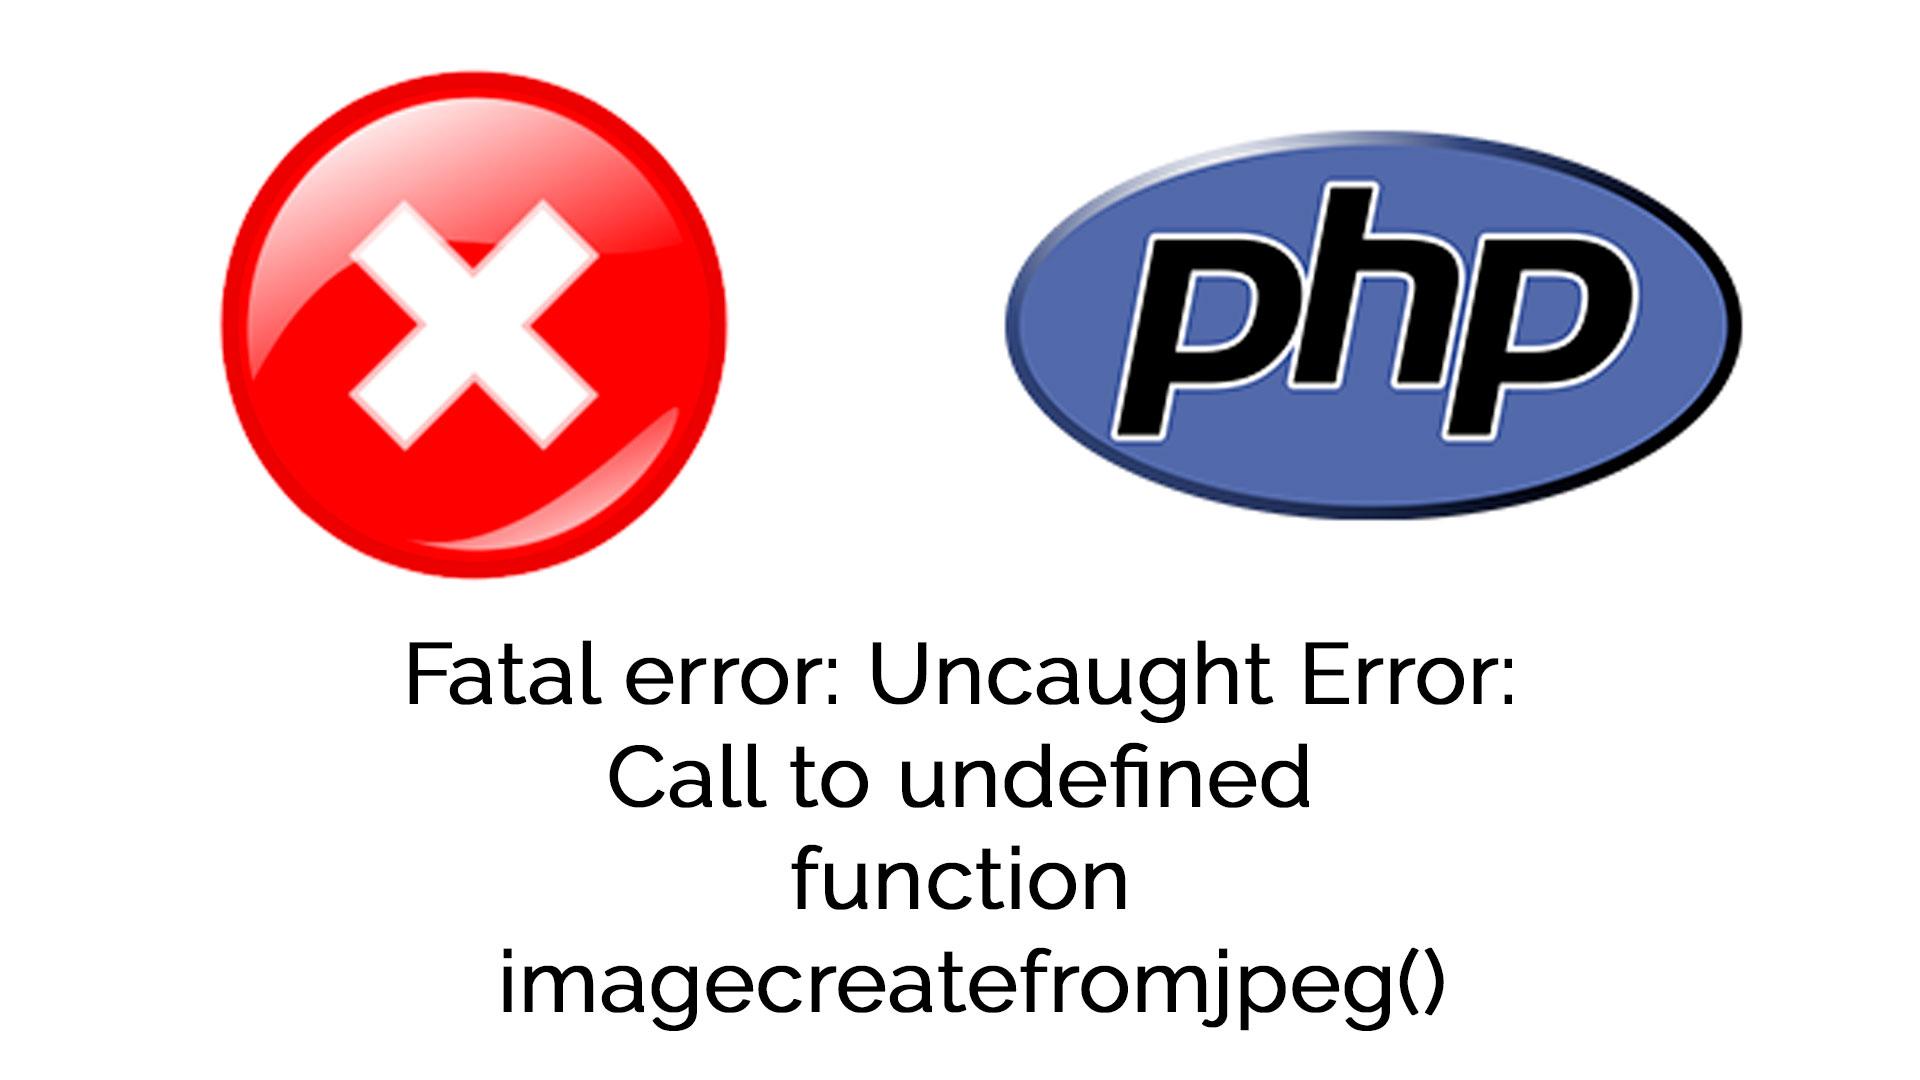 Como solucionar el error: Call to undefined function imagecreatefromjpeg()